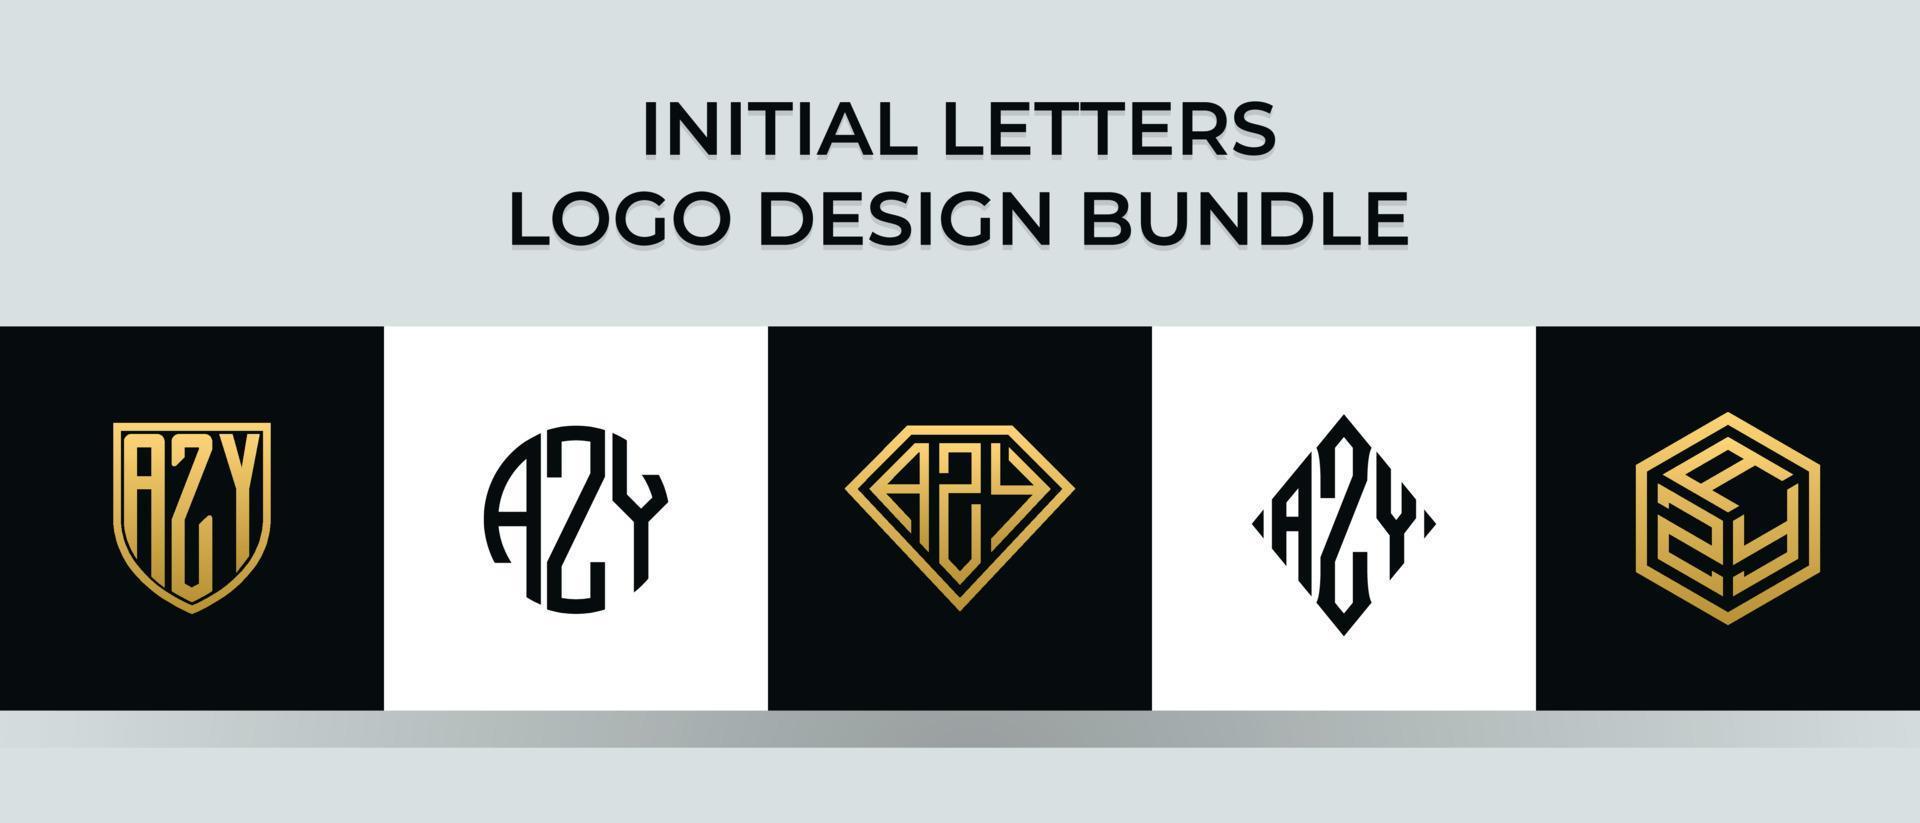 lettere iniziali azy logo design bundle vettore